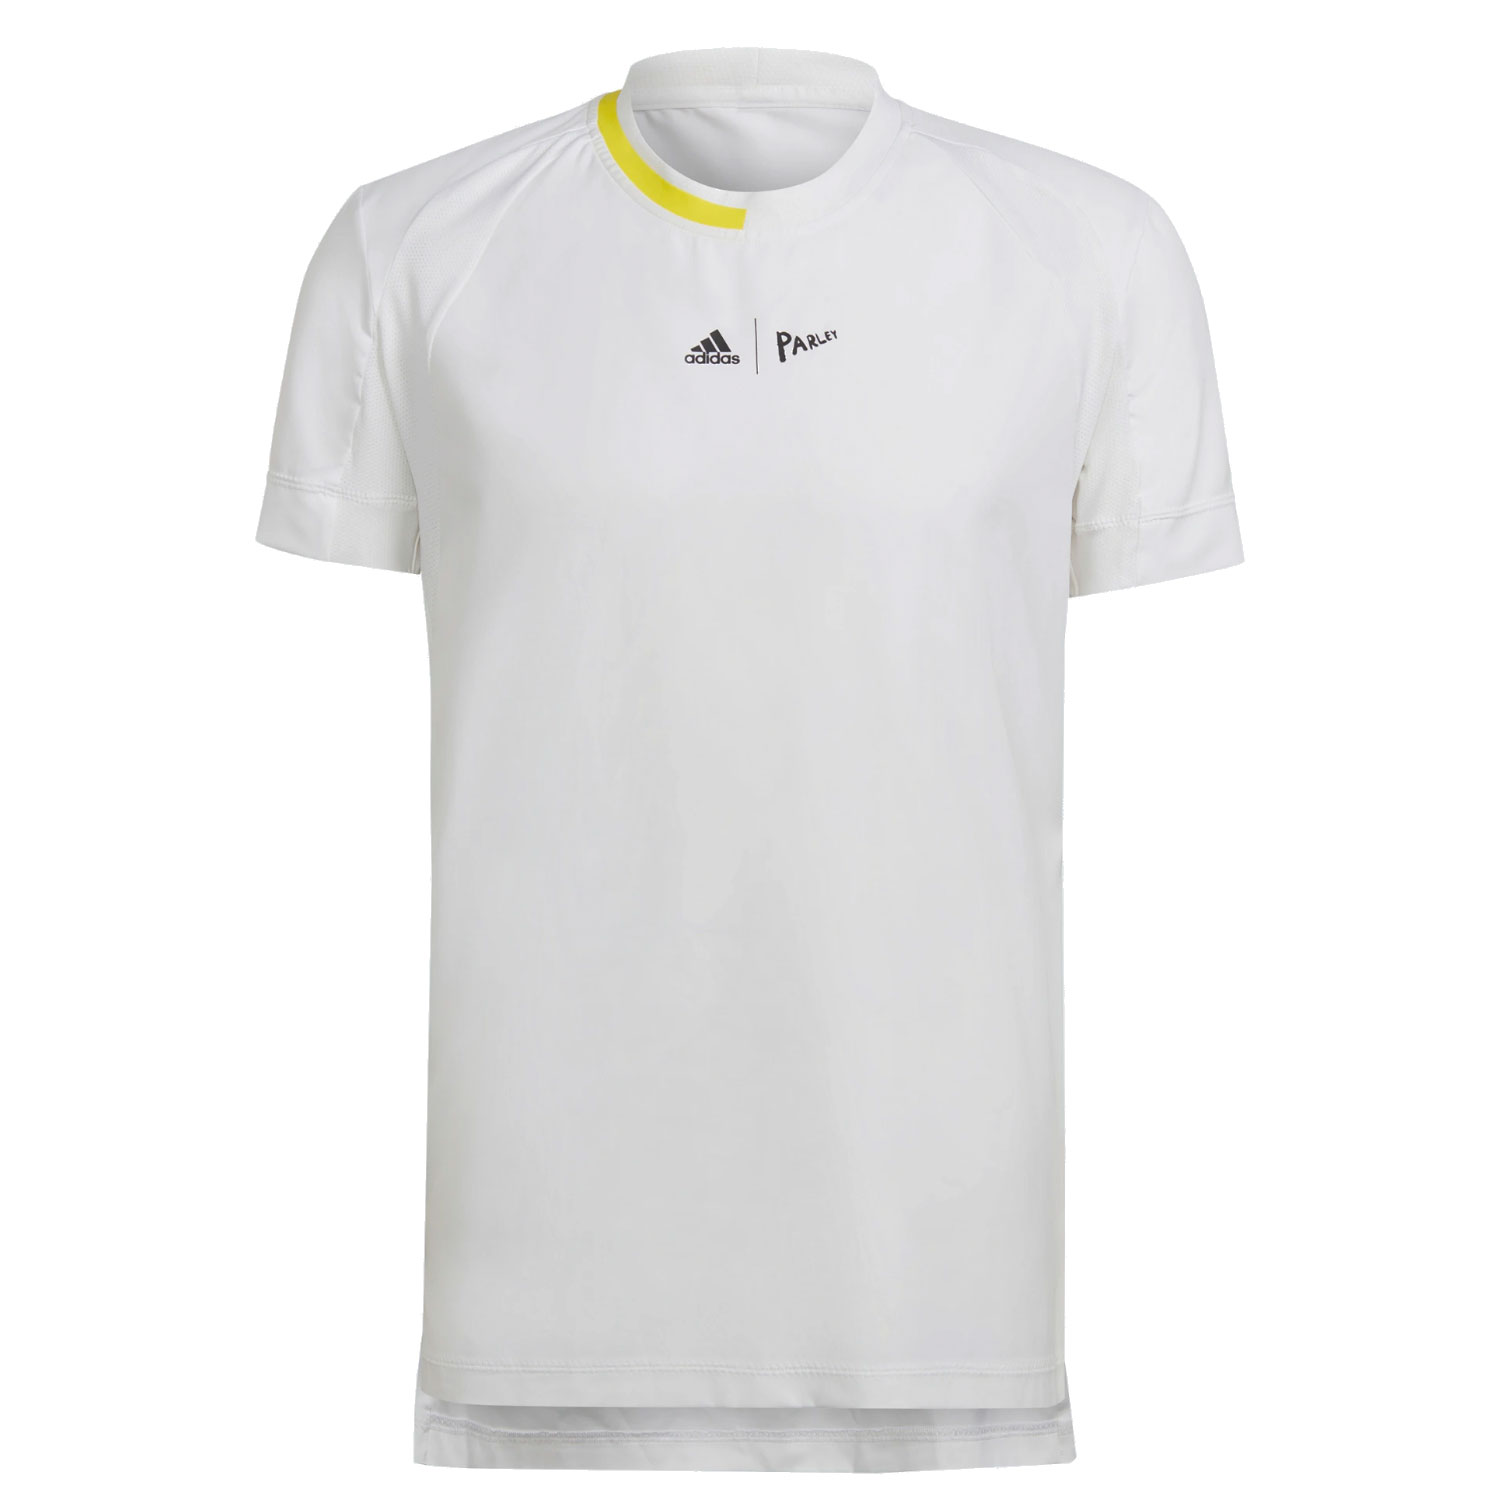 T-shirt tennis homme - Tennis Achat